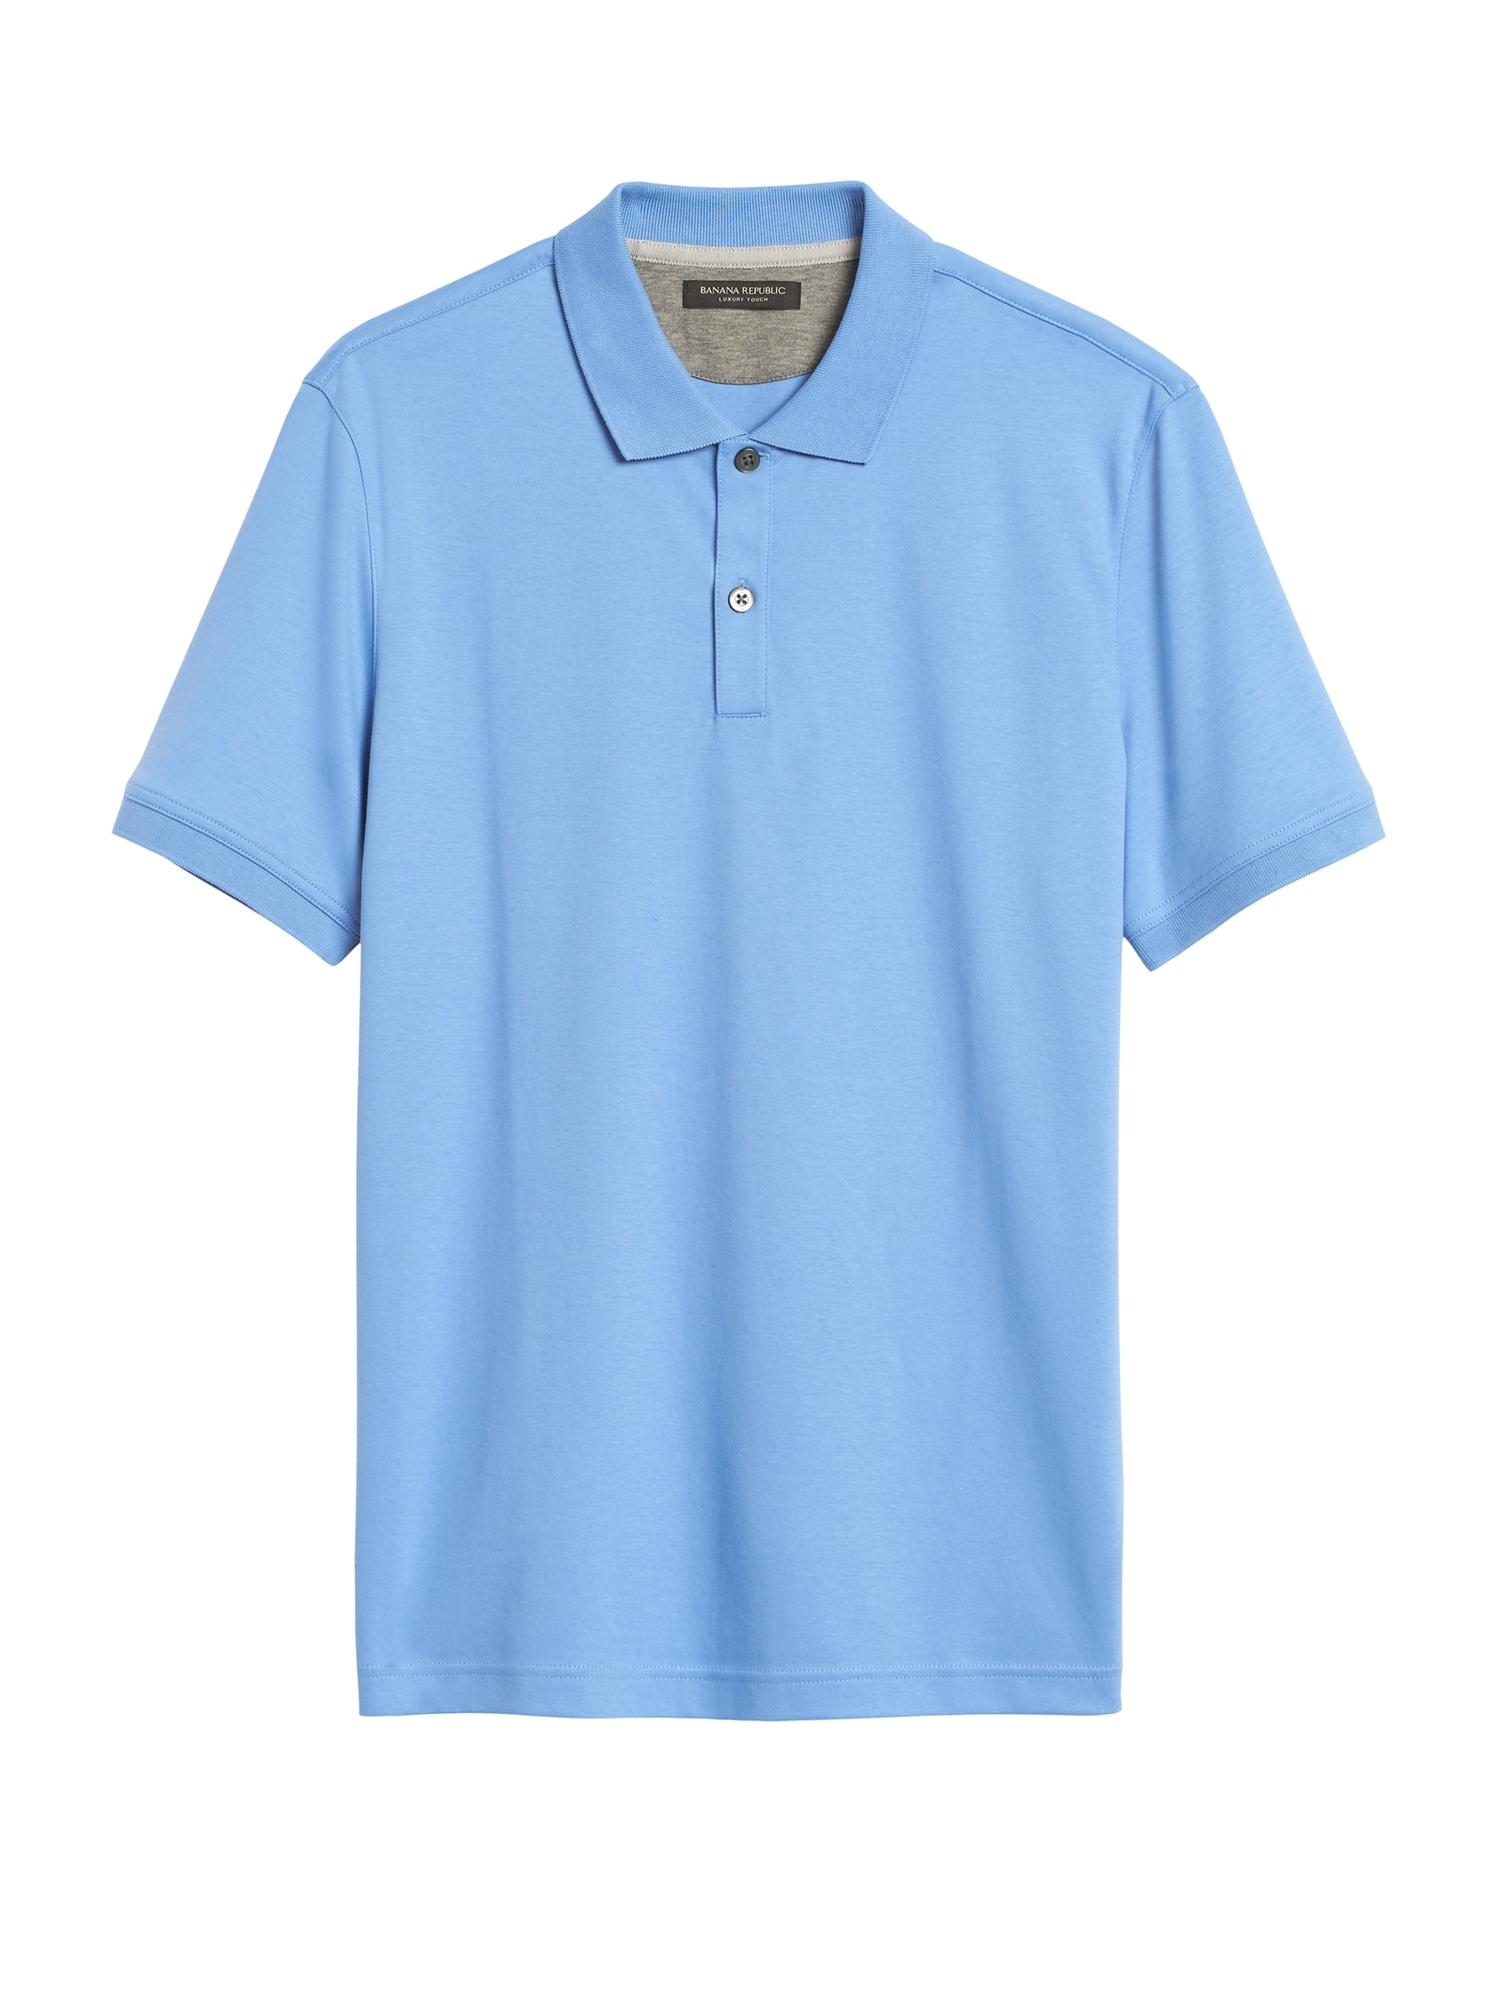 Banana Republic Luxury-touch Polo Shirt in Blue Iris (Blue) for Men - Lyst